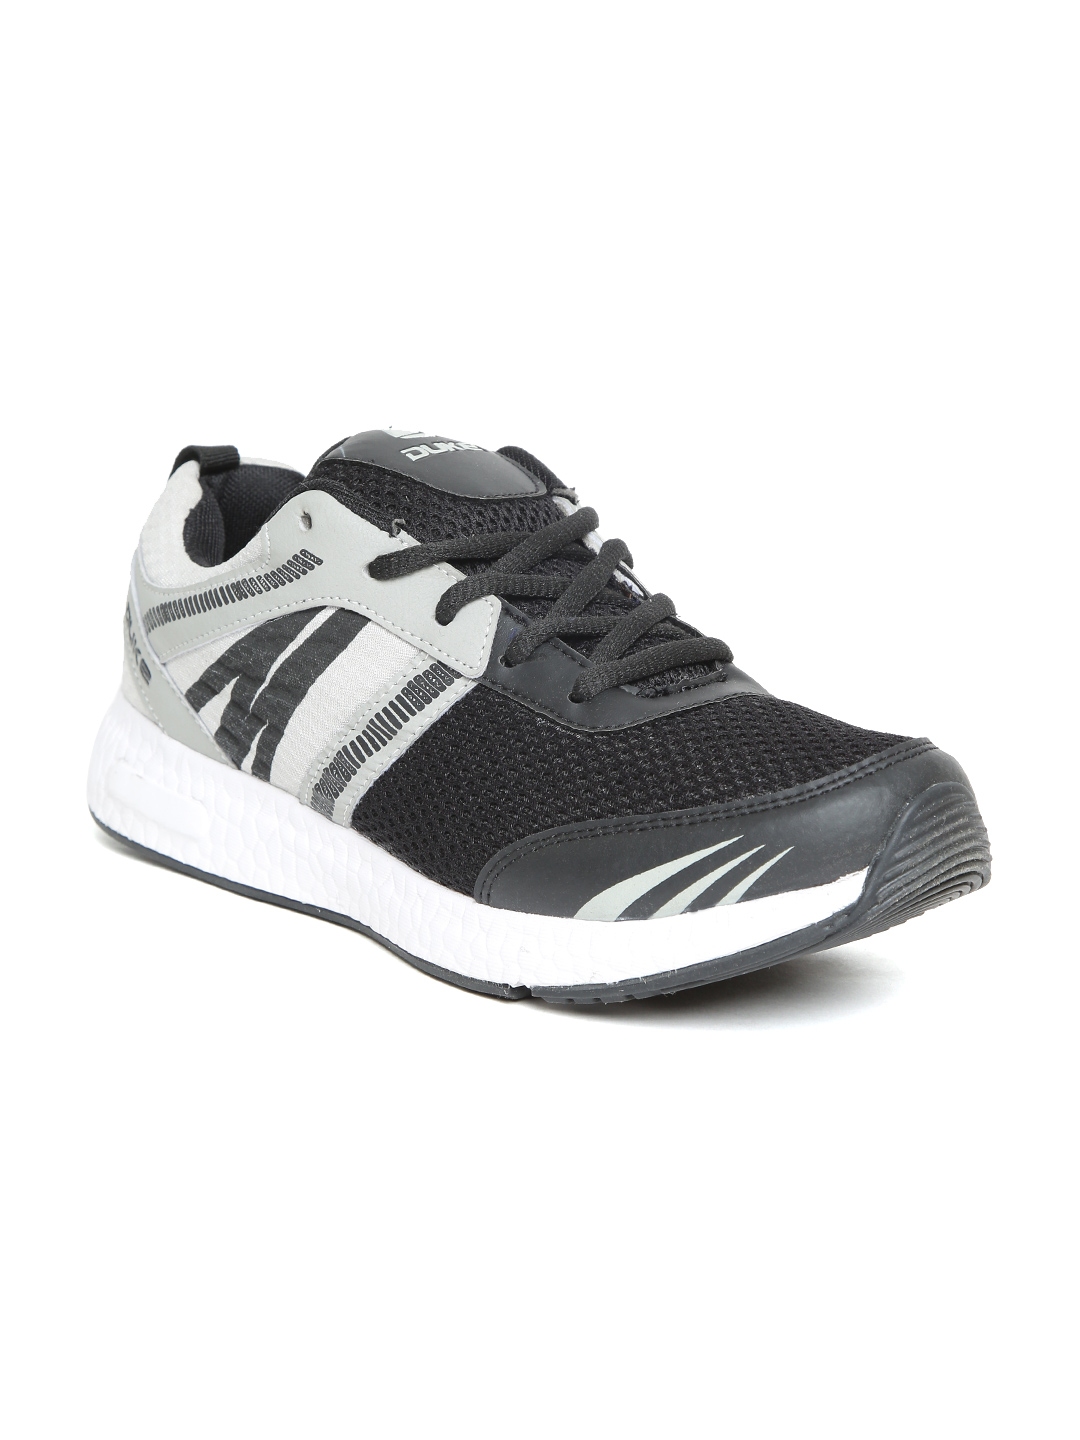 Buy Duke Men Black & Grey Colourblocked Running Shoes - Sports Shoes ...